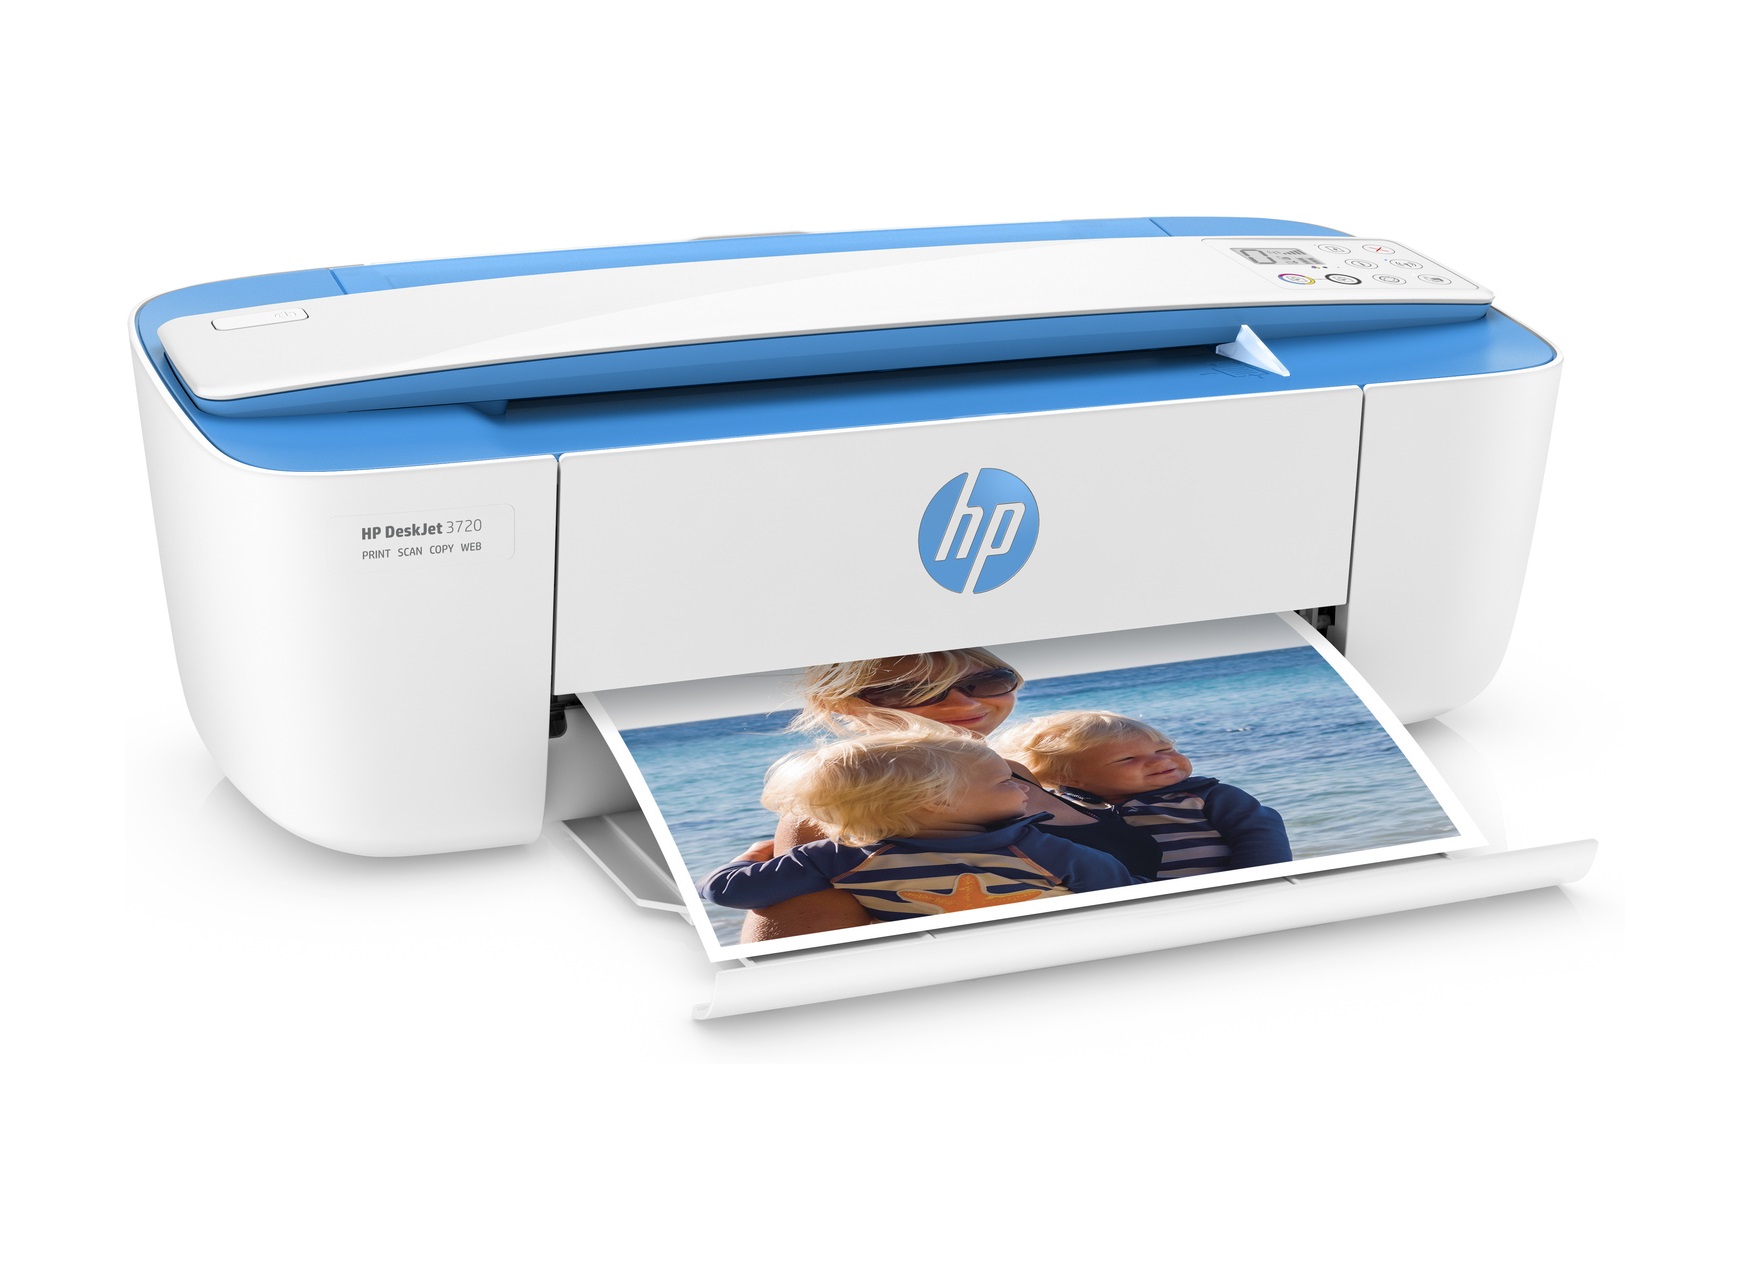 HP printer support's Logo